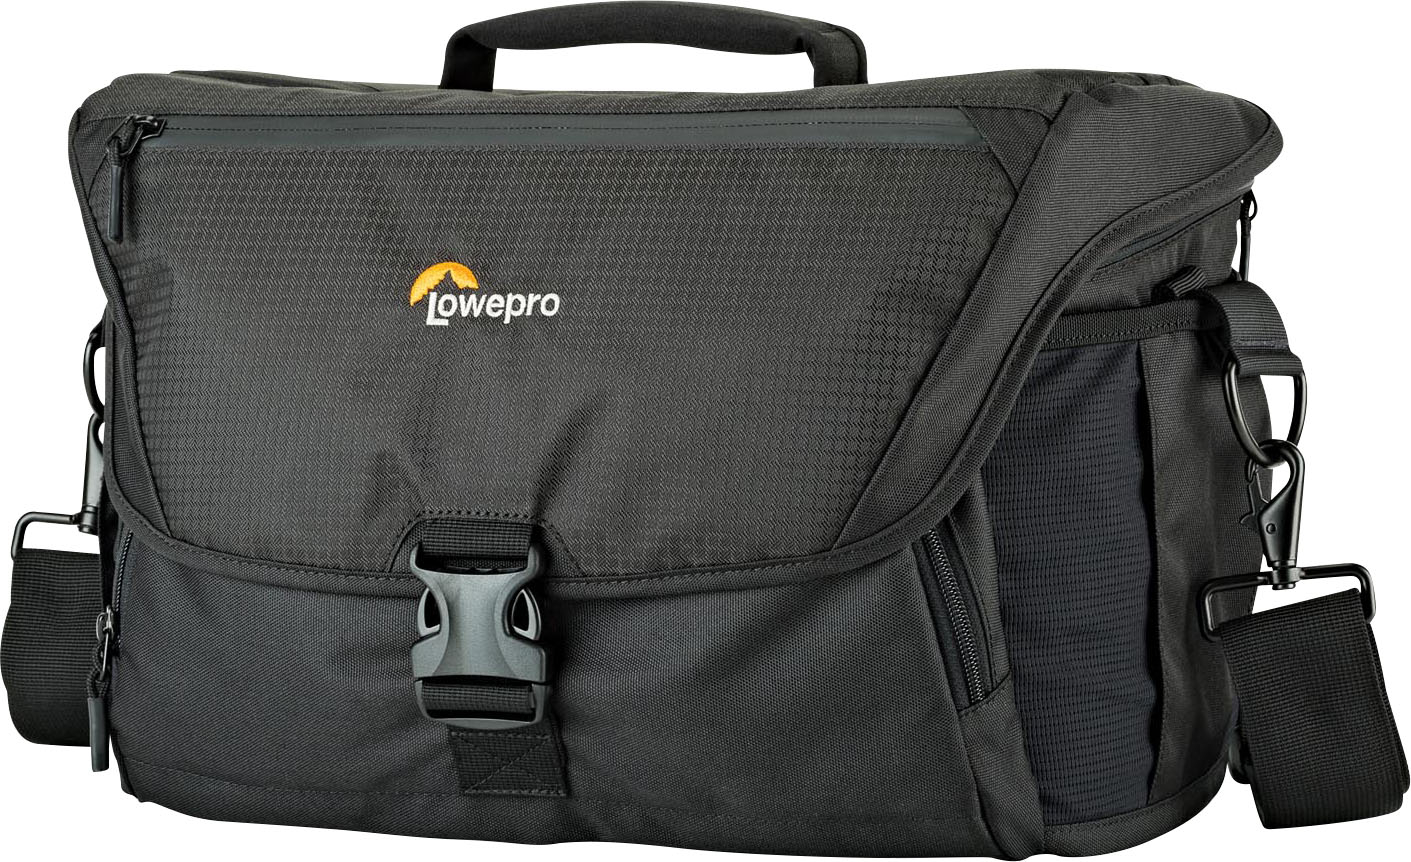 Angle View: Lowepro - Nova 200 AW II Messenger Bag - Black